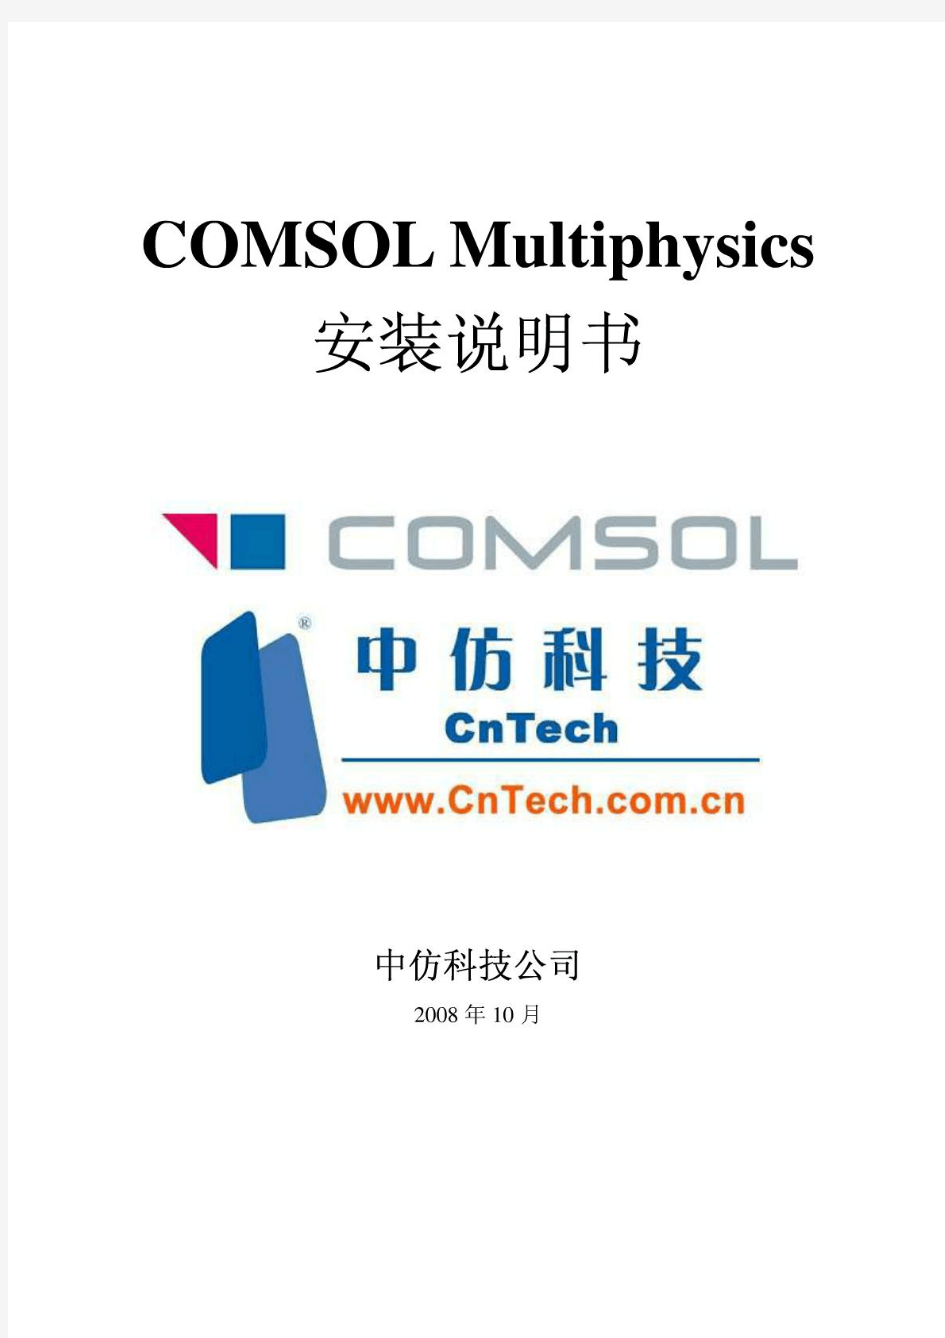 COMSOL_Multiphysics安装说明书